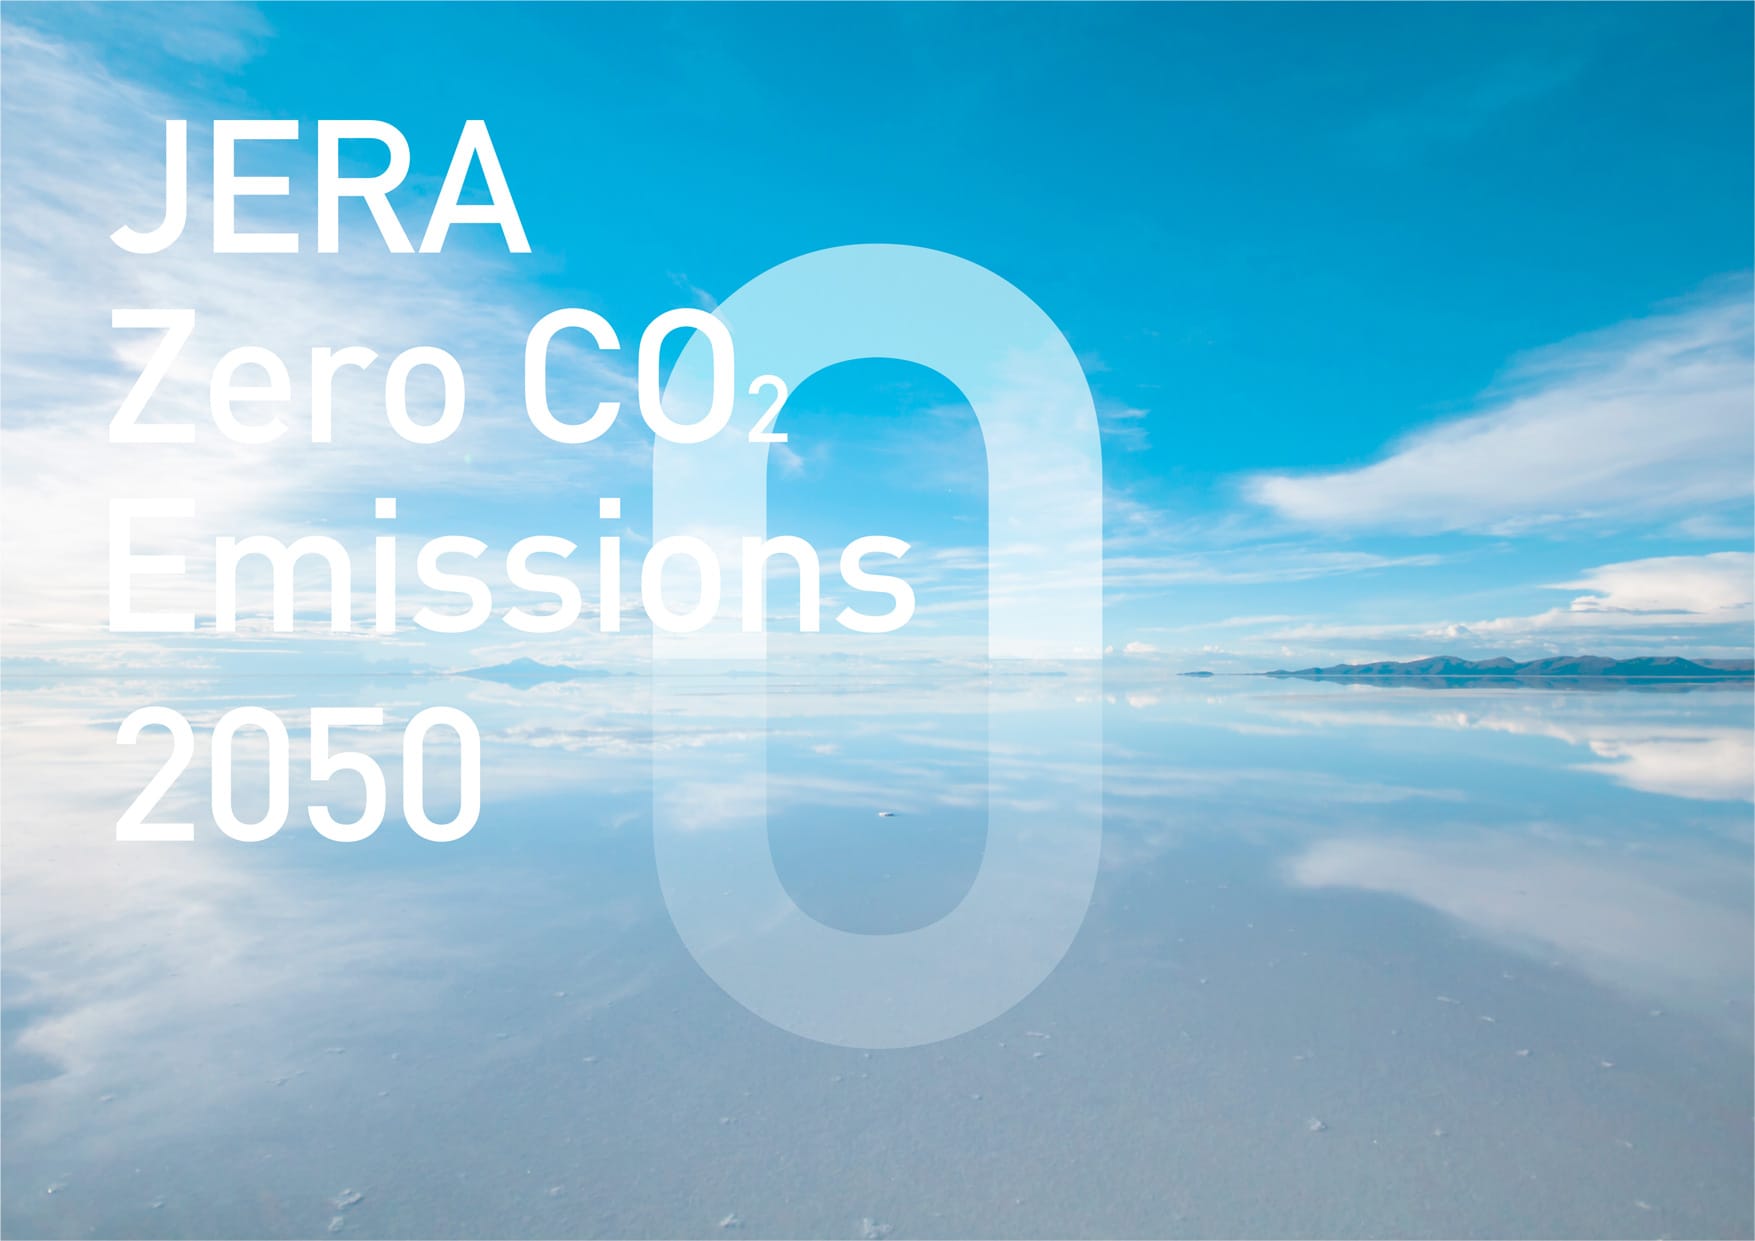 JERA Zero CO2 Emissions 2050